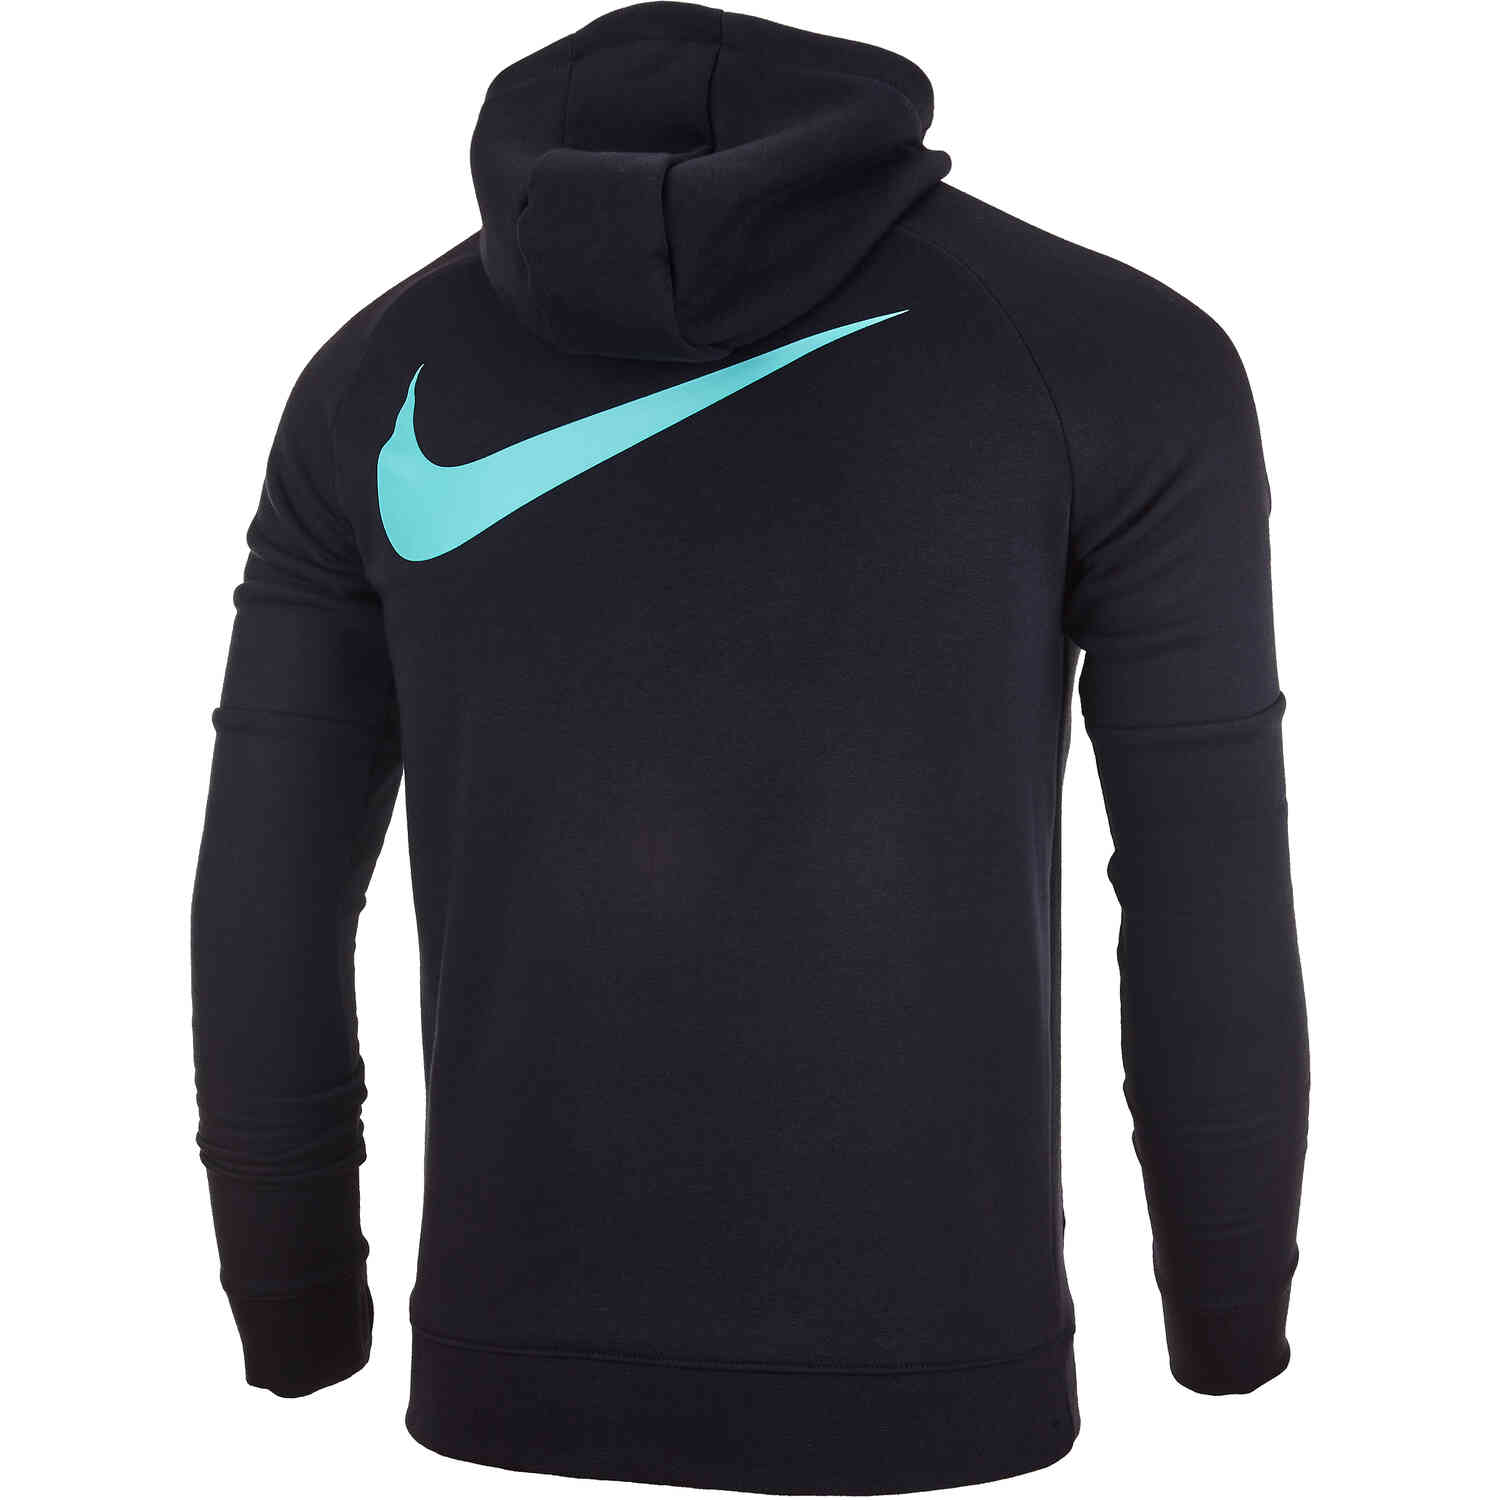 Kids Nike Liverpool Pullover Fleece Hoodie - Black/Hyper Turq - SoccerPro